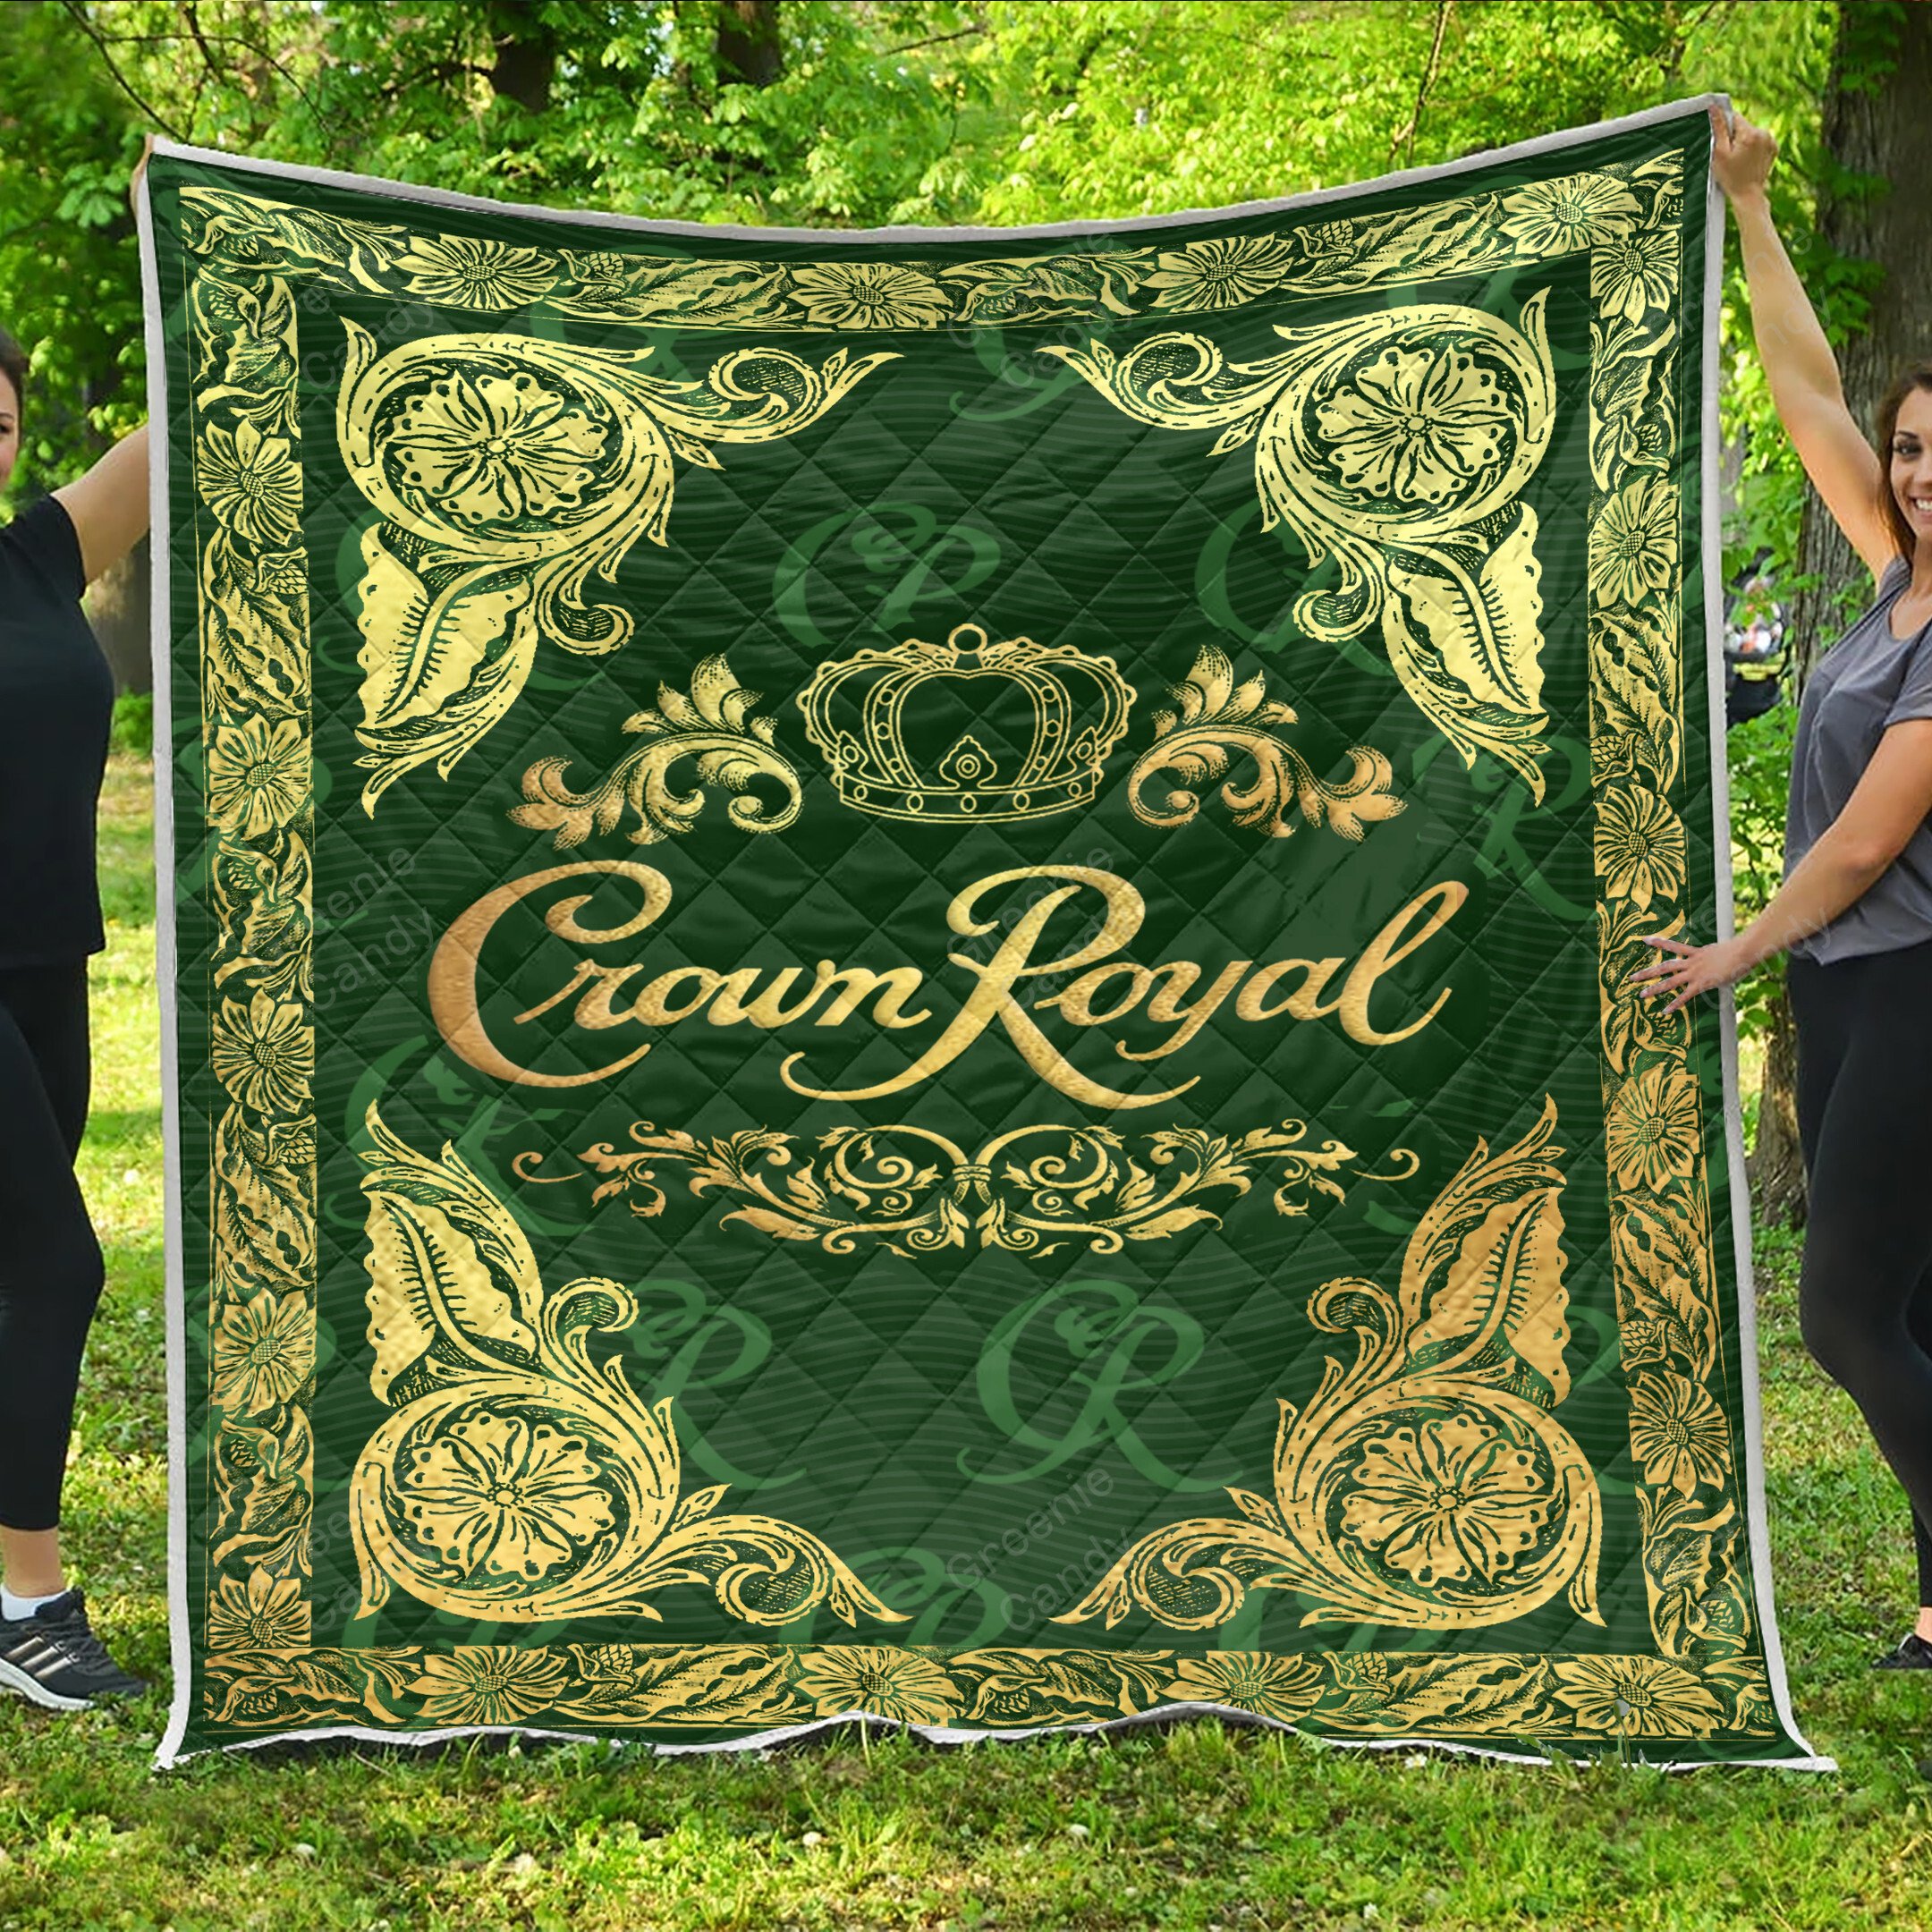 Crown Royal Regal Apple Whisky blanket quilt